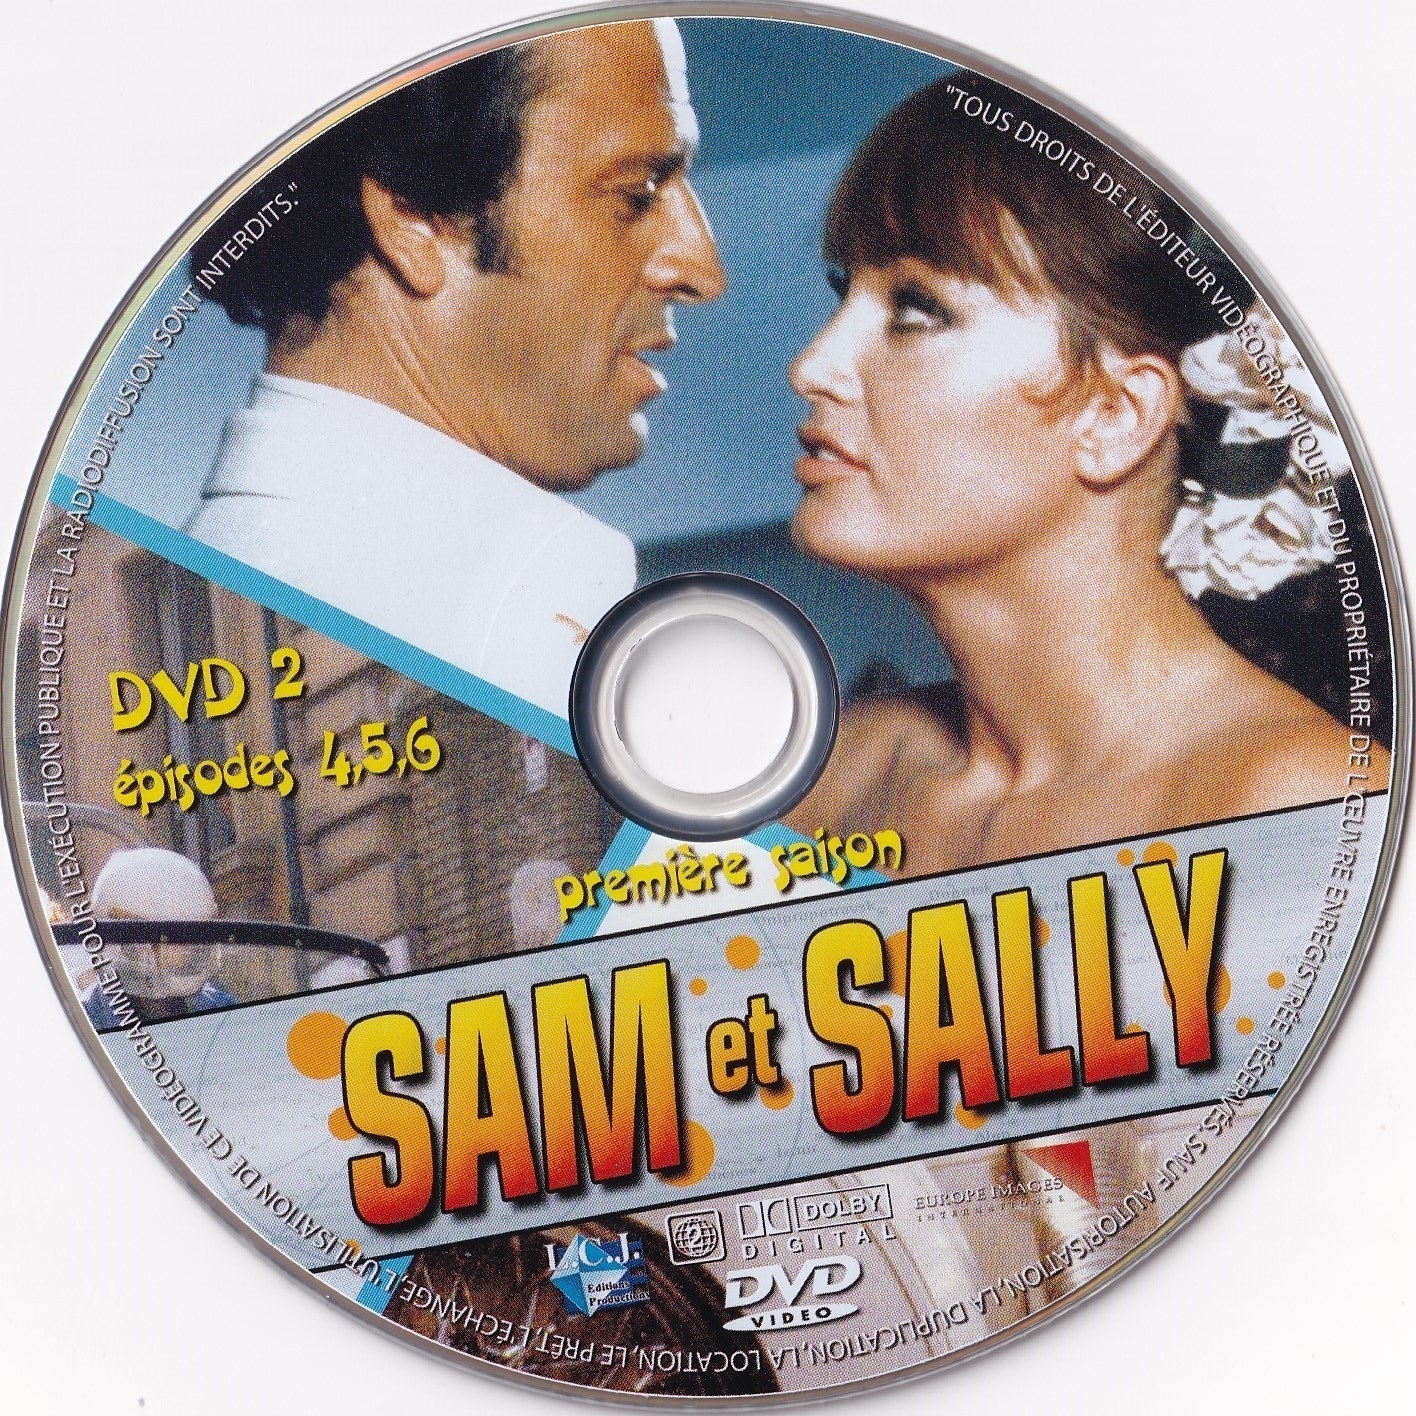 Sam et Sally Saison 1 DVD 2